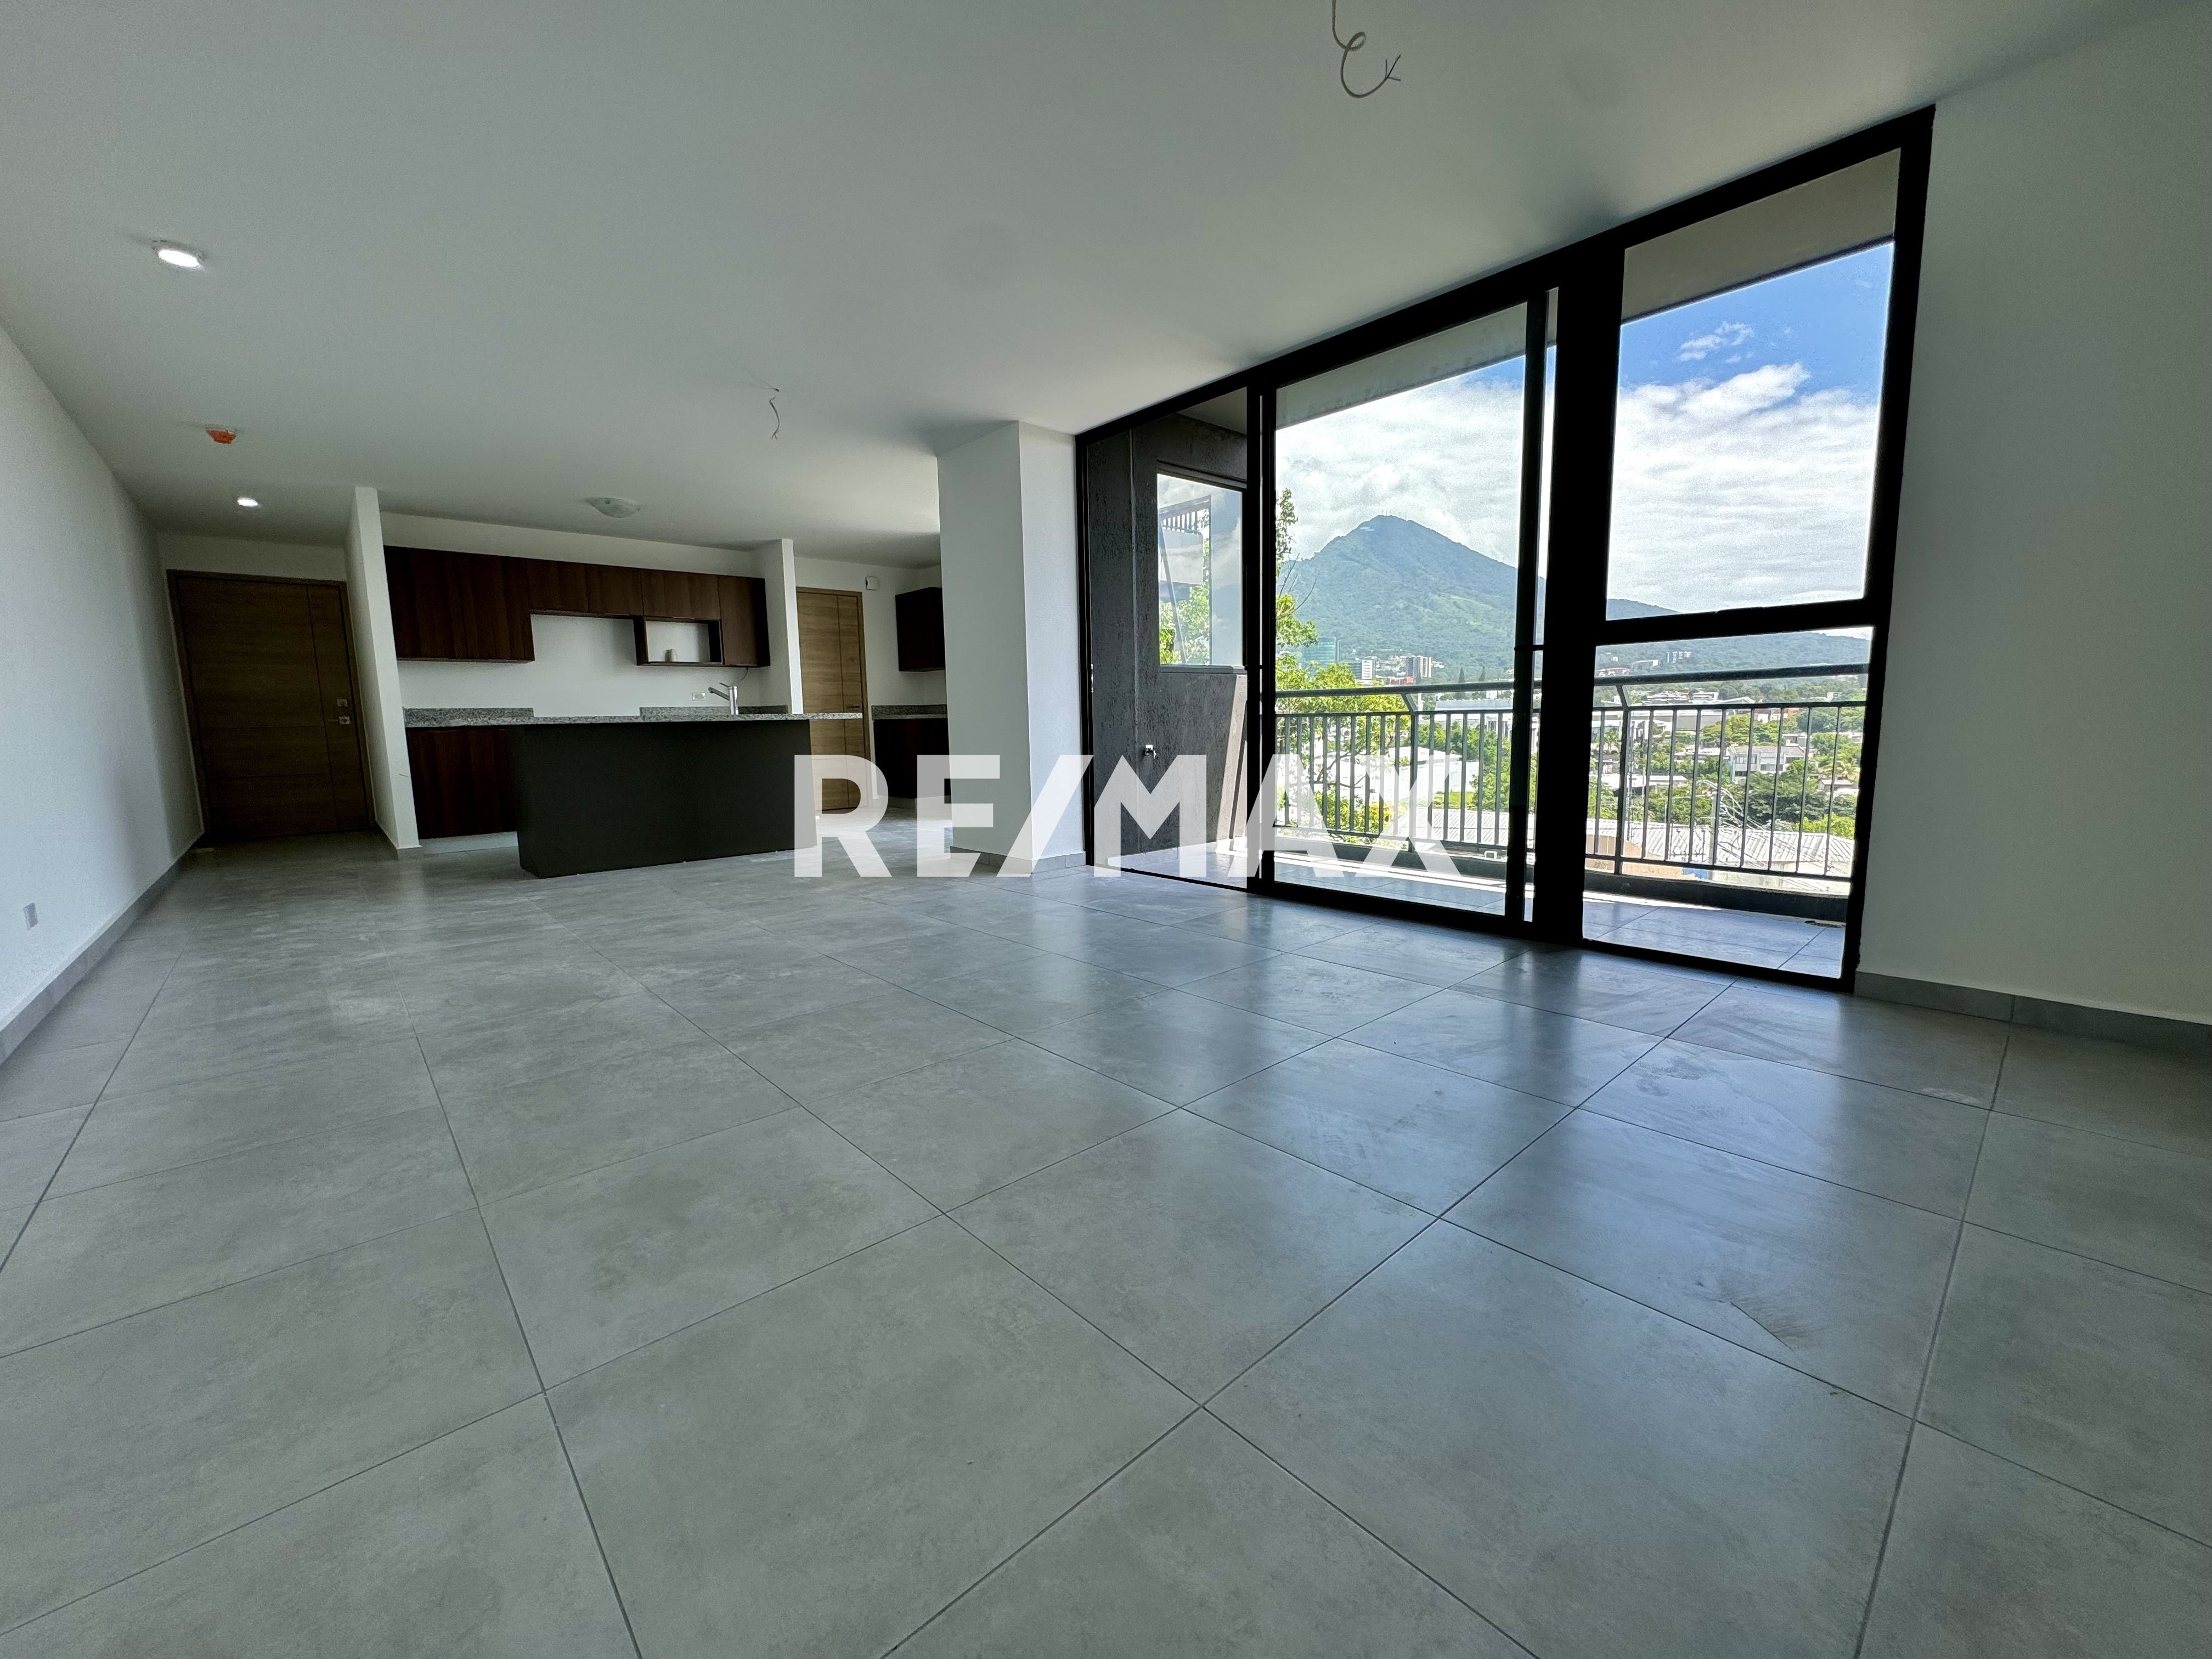 Remax real estate, El Salvador, San Salvador, Luxury apartment for rent in Trelum 